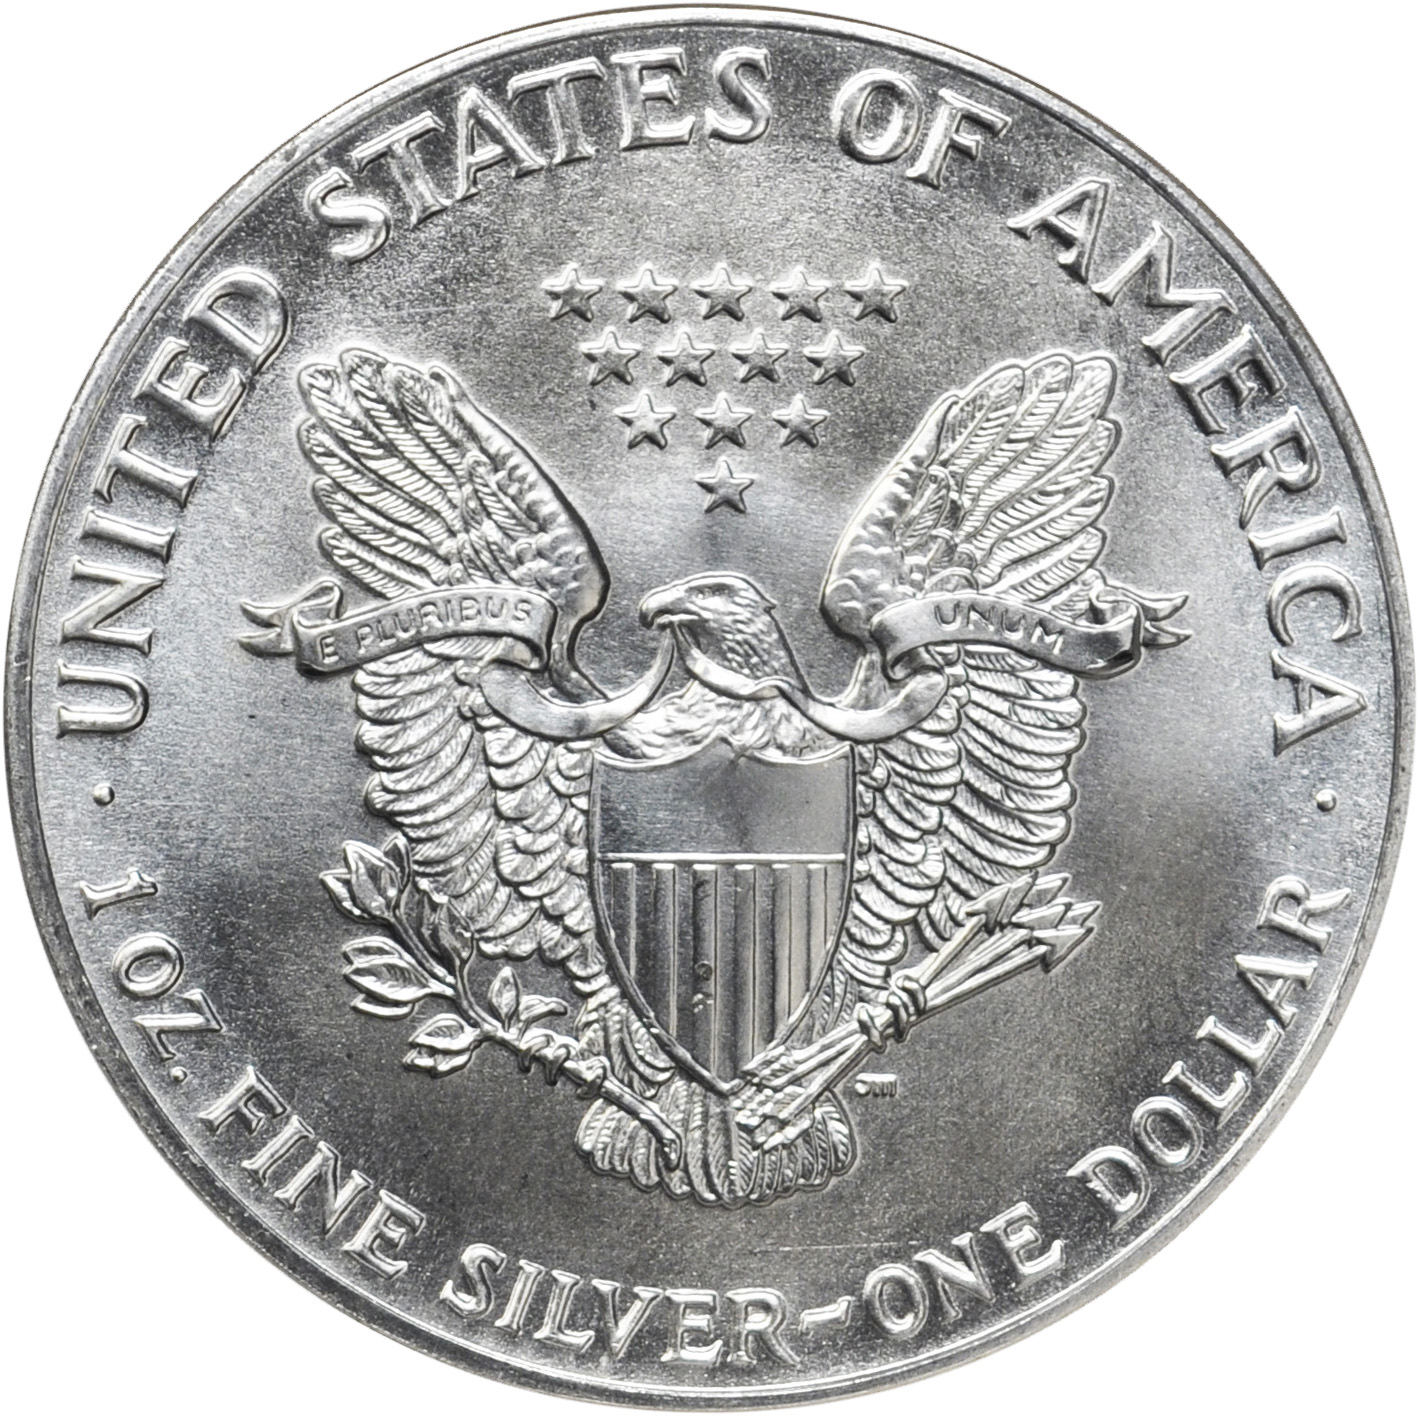 Value of 1987 $1 Silver Coin | American Silver Eagle Coin